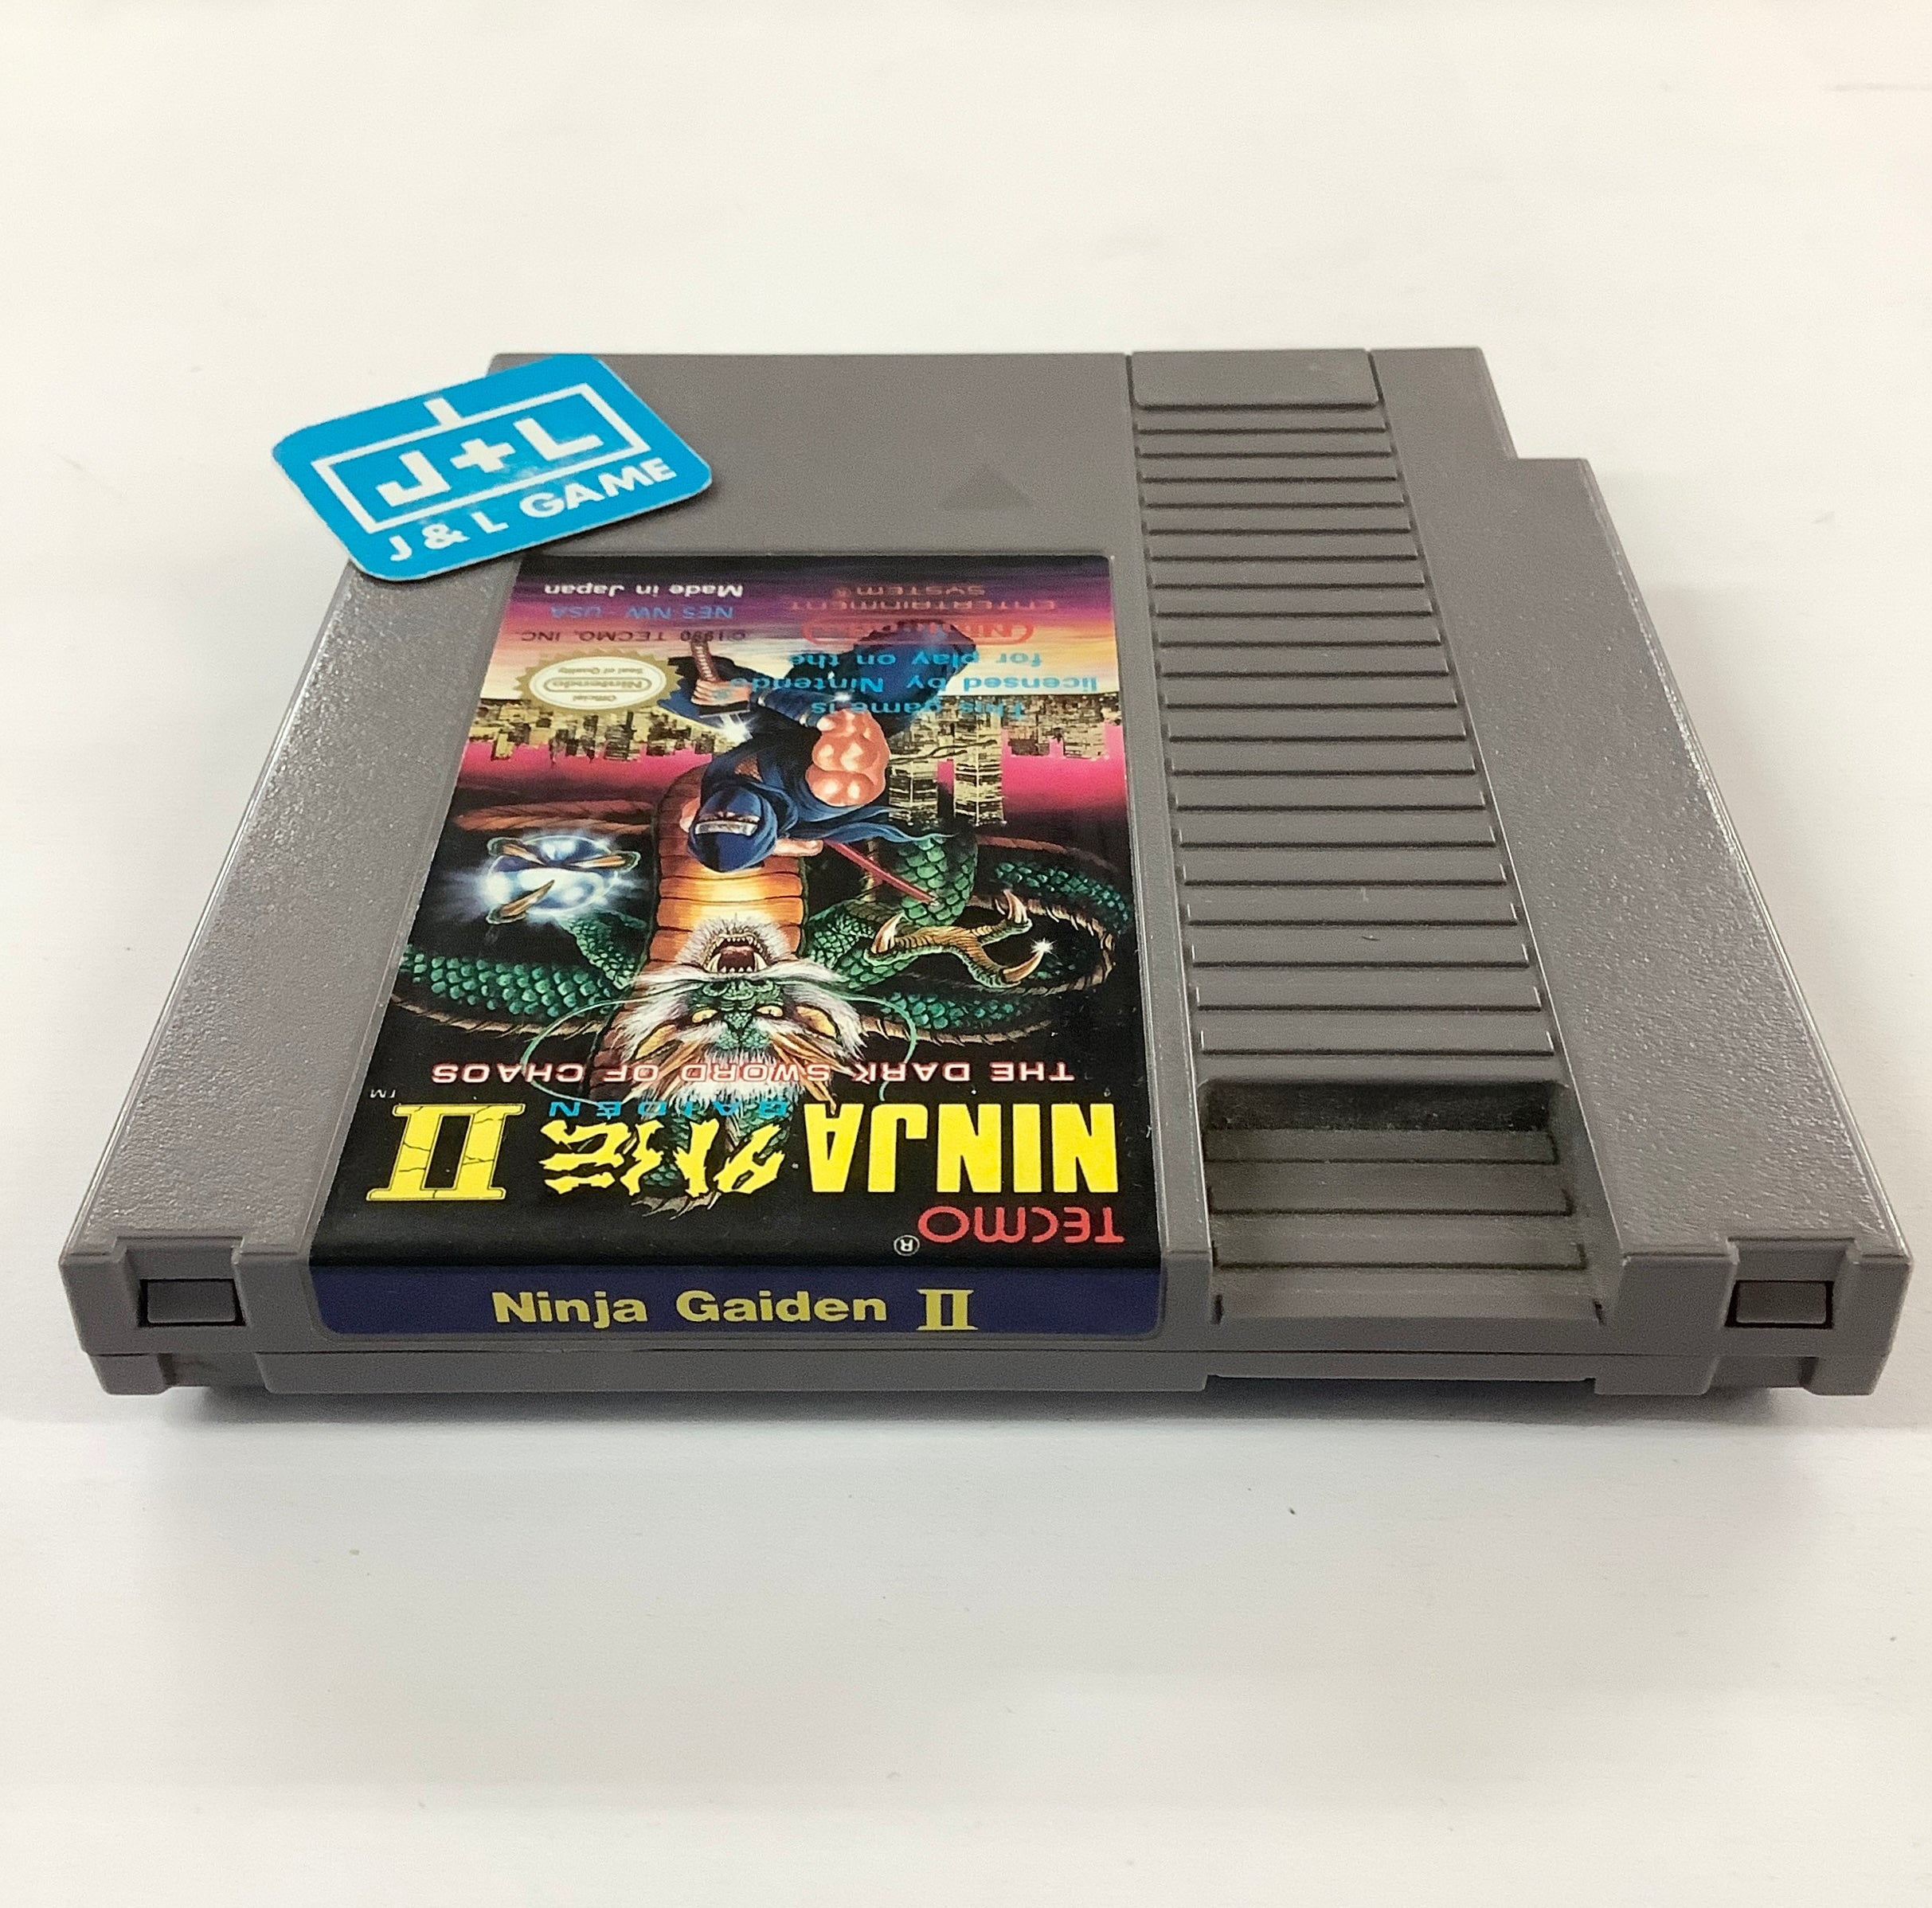 Ninja Gaiden II: The Dark Sword of Chaos - (NES) Nintendo Entertainment System [Pre-Owned] Video Games Tecmo   